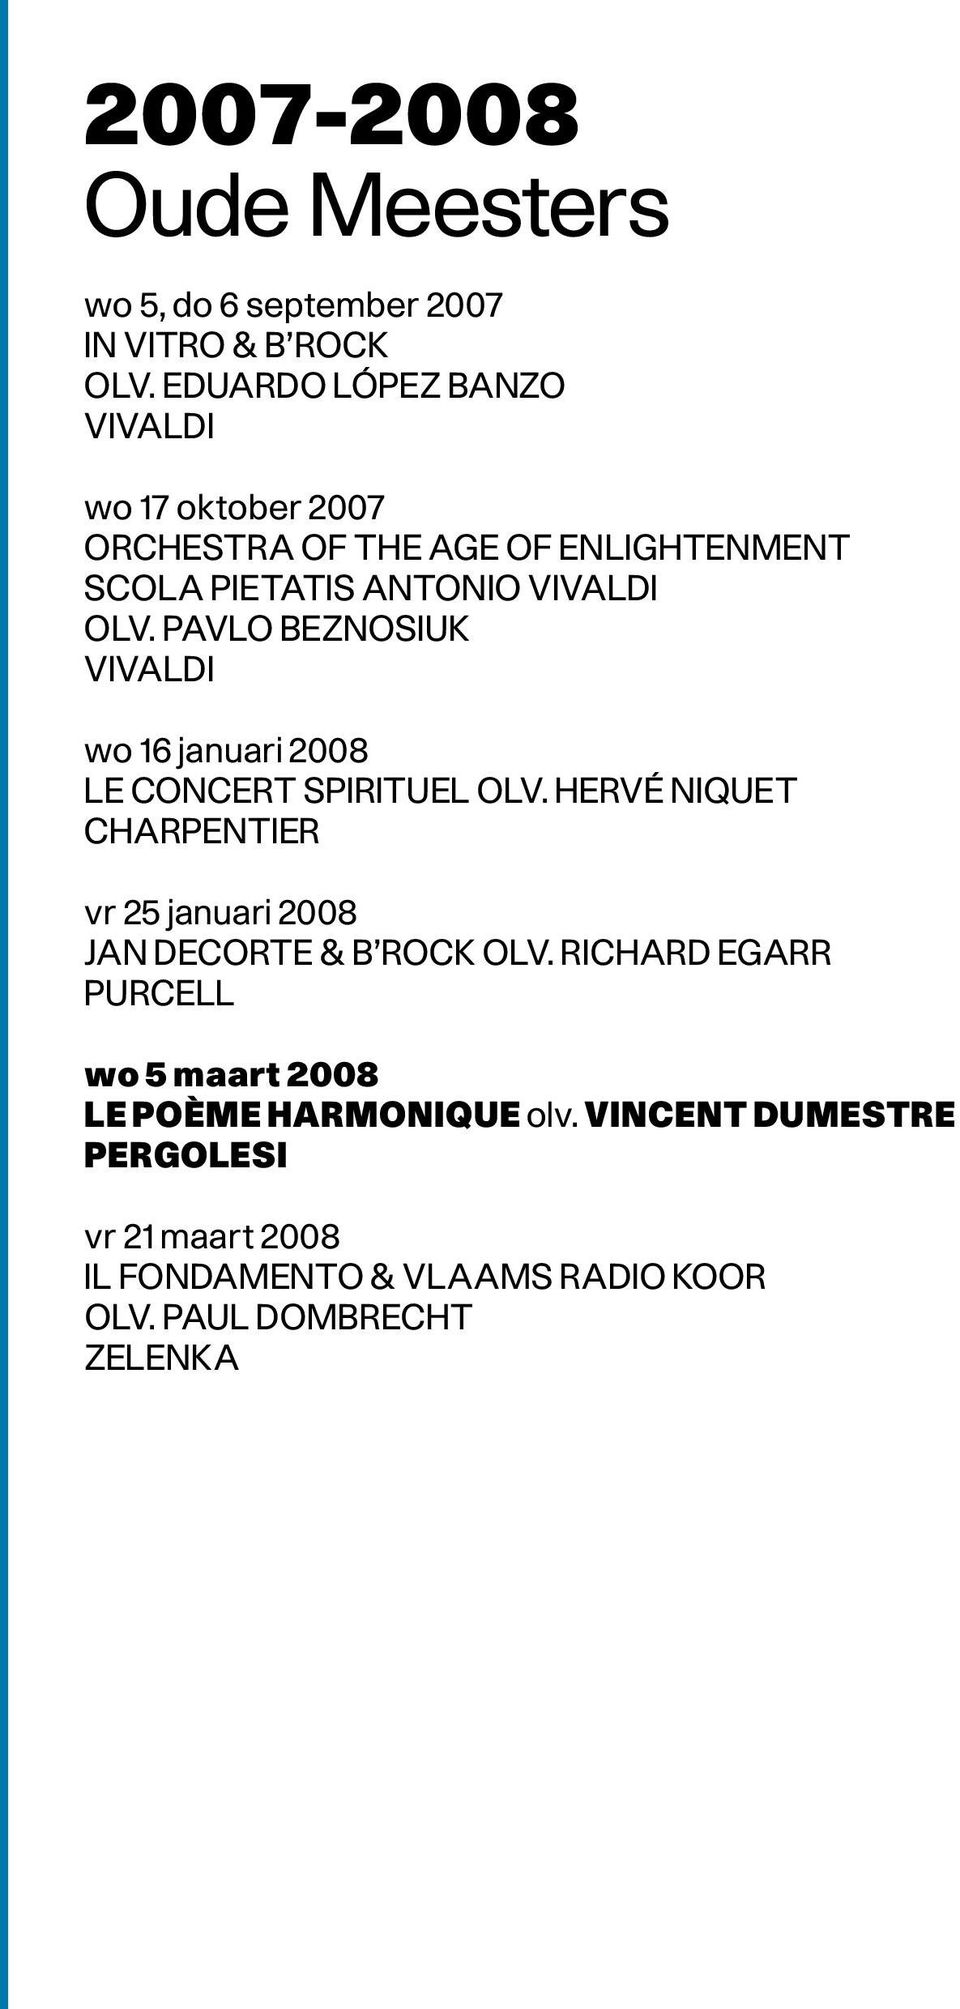 Pavlo Beznosiuk Vivaldi wo 16 januari 2008 Le Concert Spirituel olv.